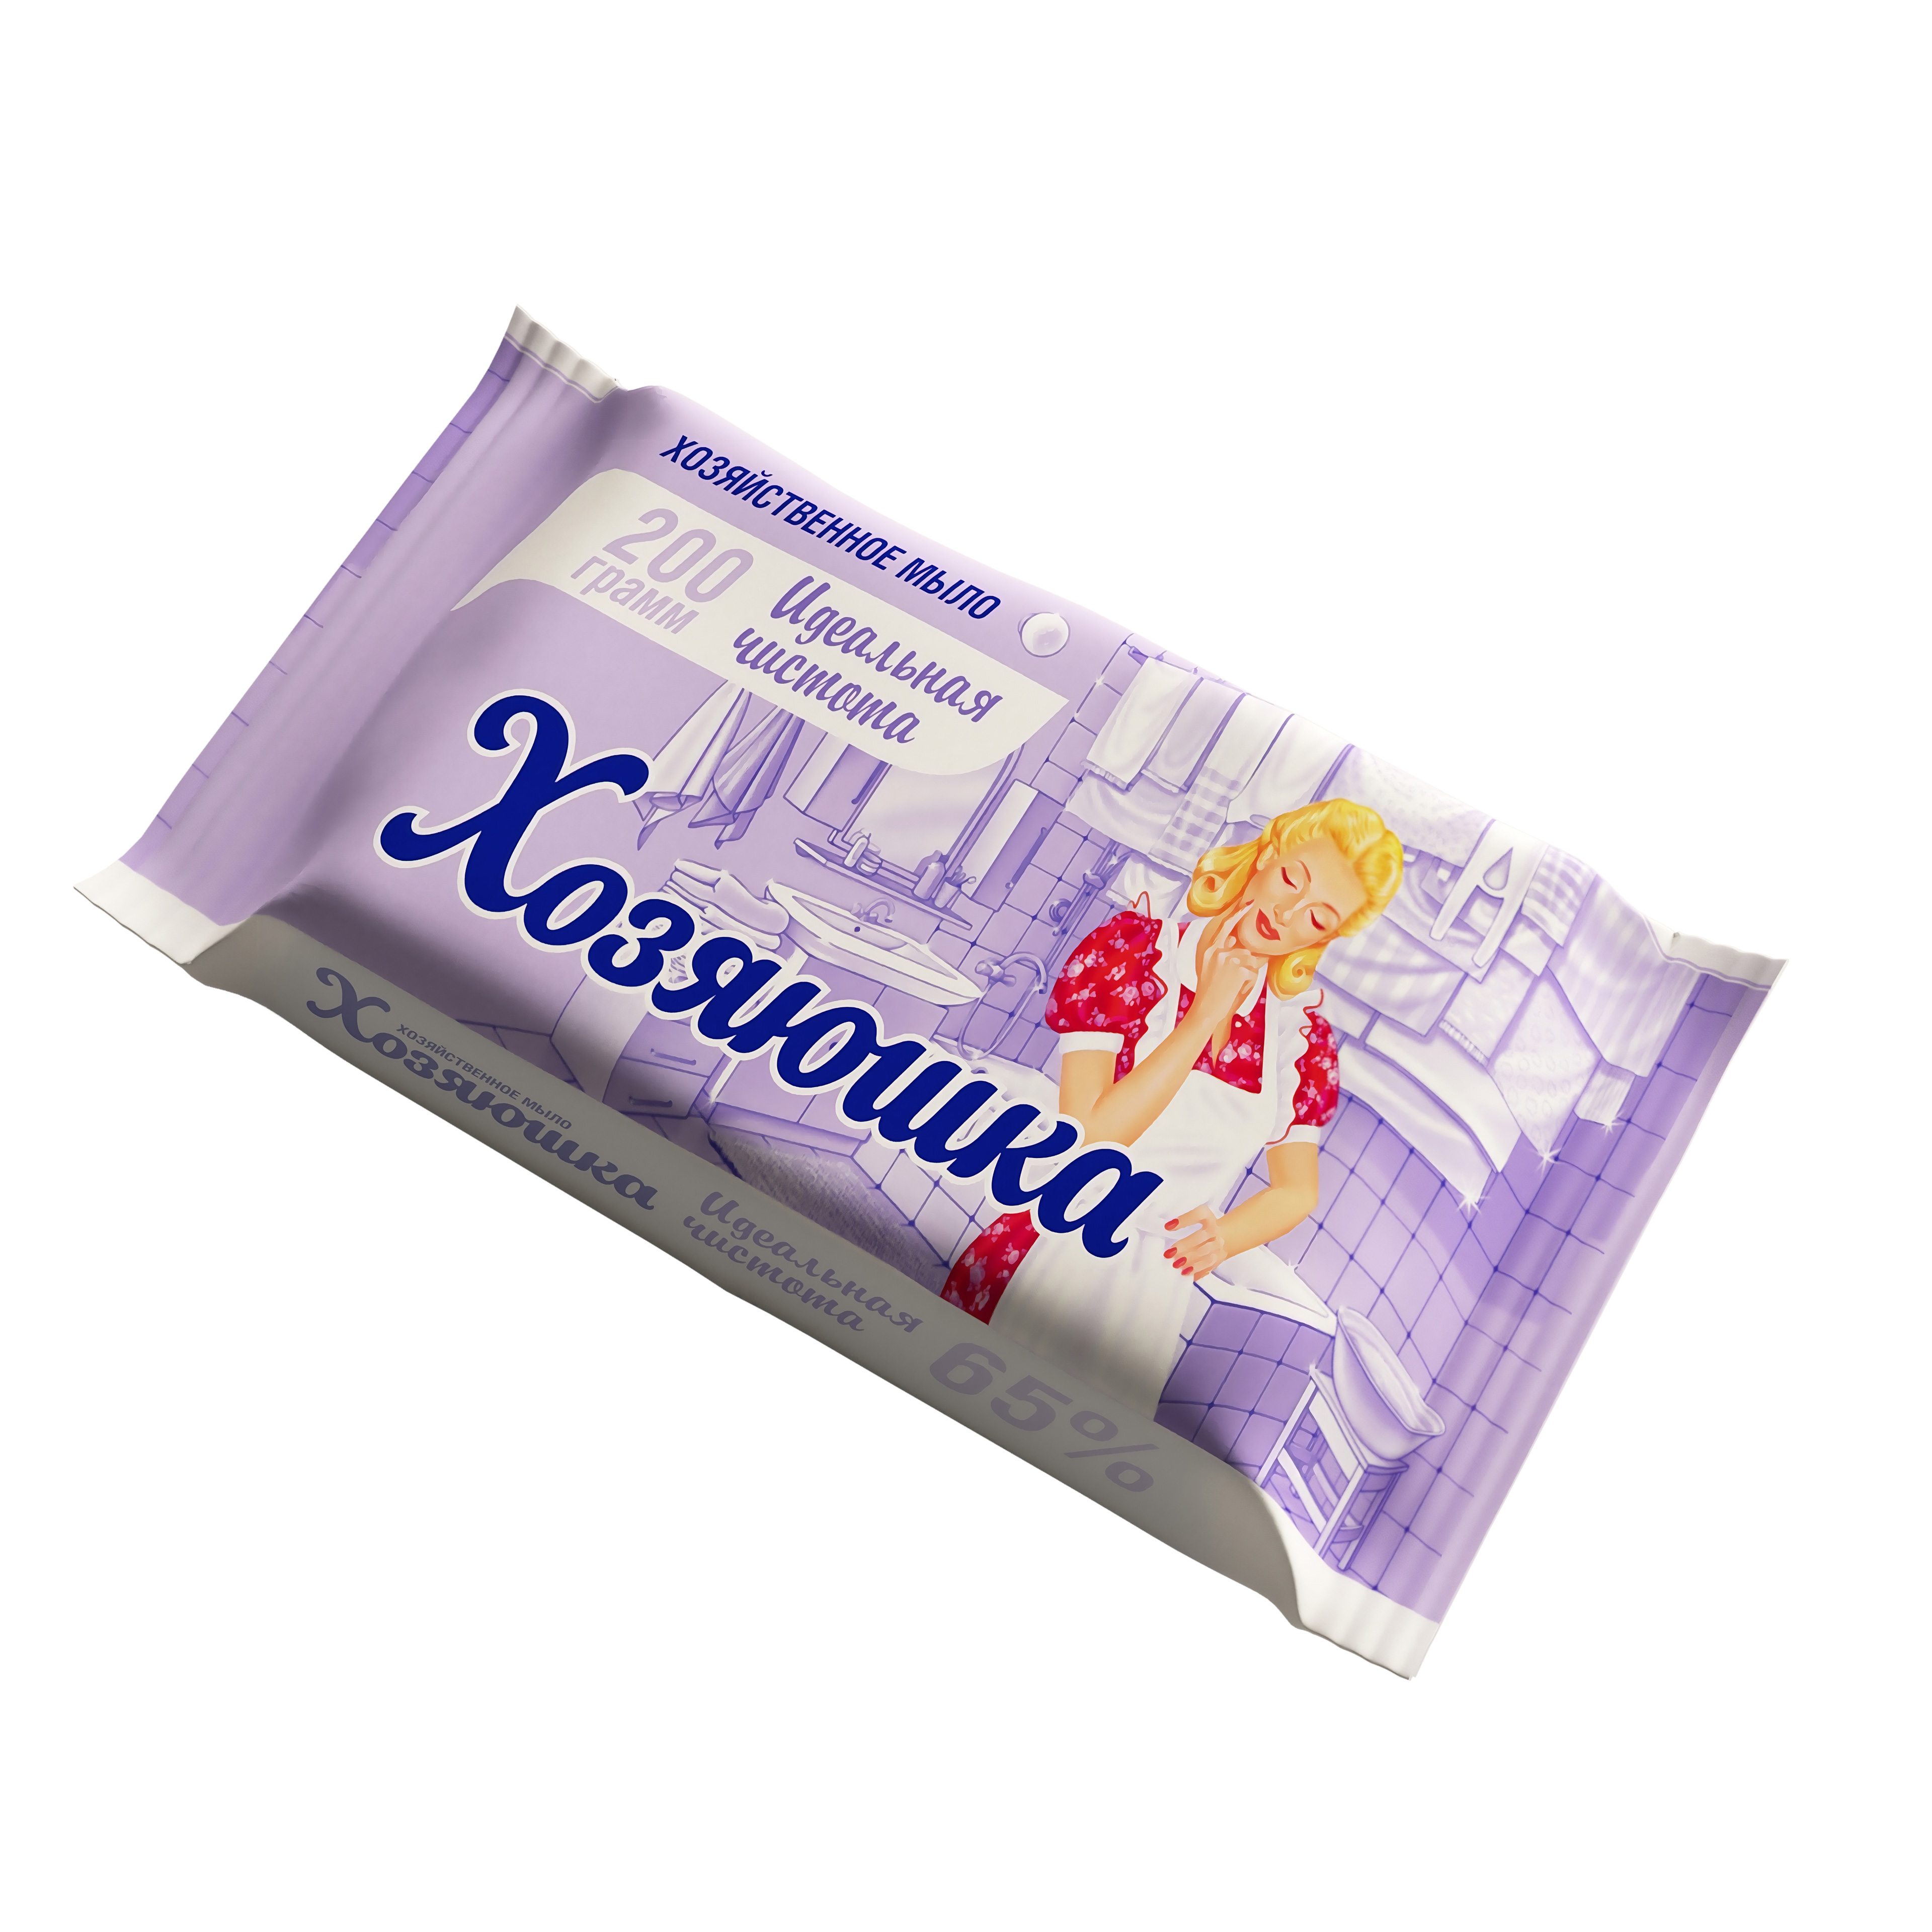 Laundry soap Hozyayushka 65% perfect cleanness wholesale